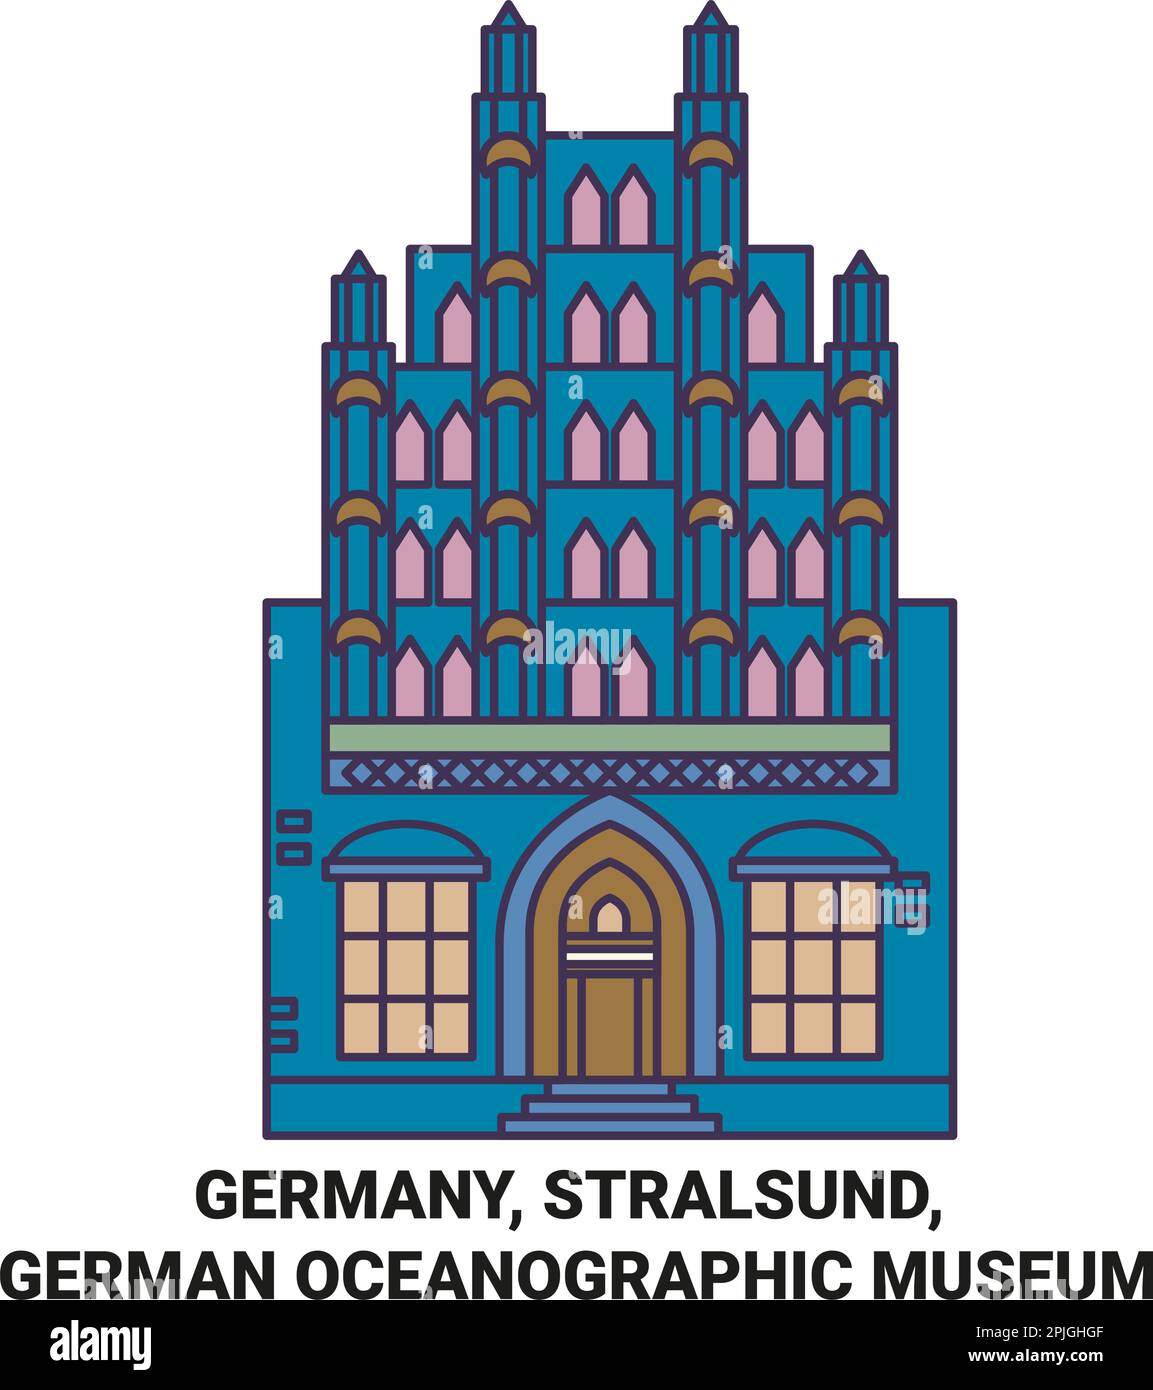 Germany, Stralsund, German Oceanographic Museum travel landmark vector illustration Stock Vector